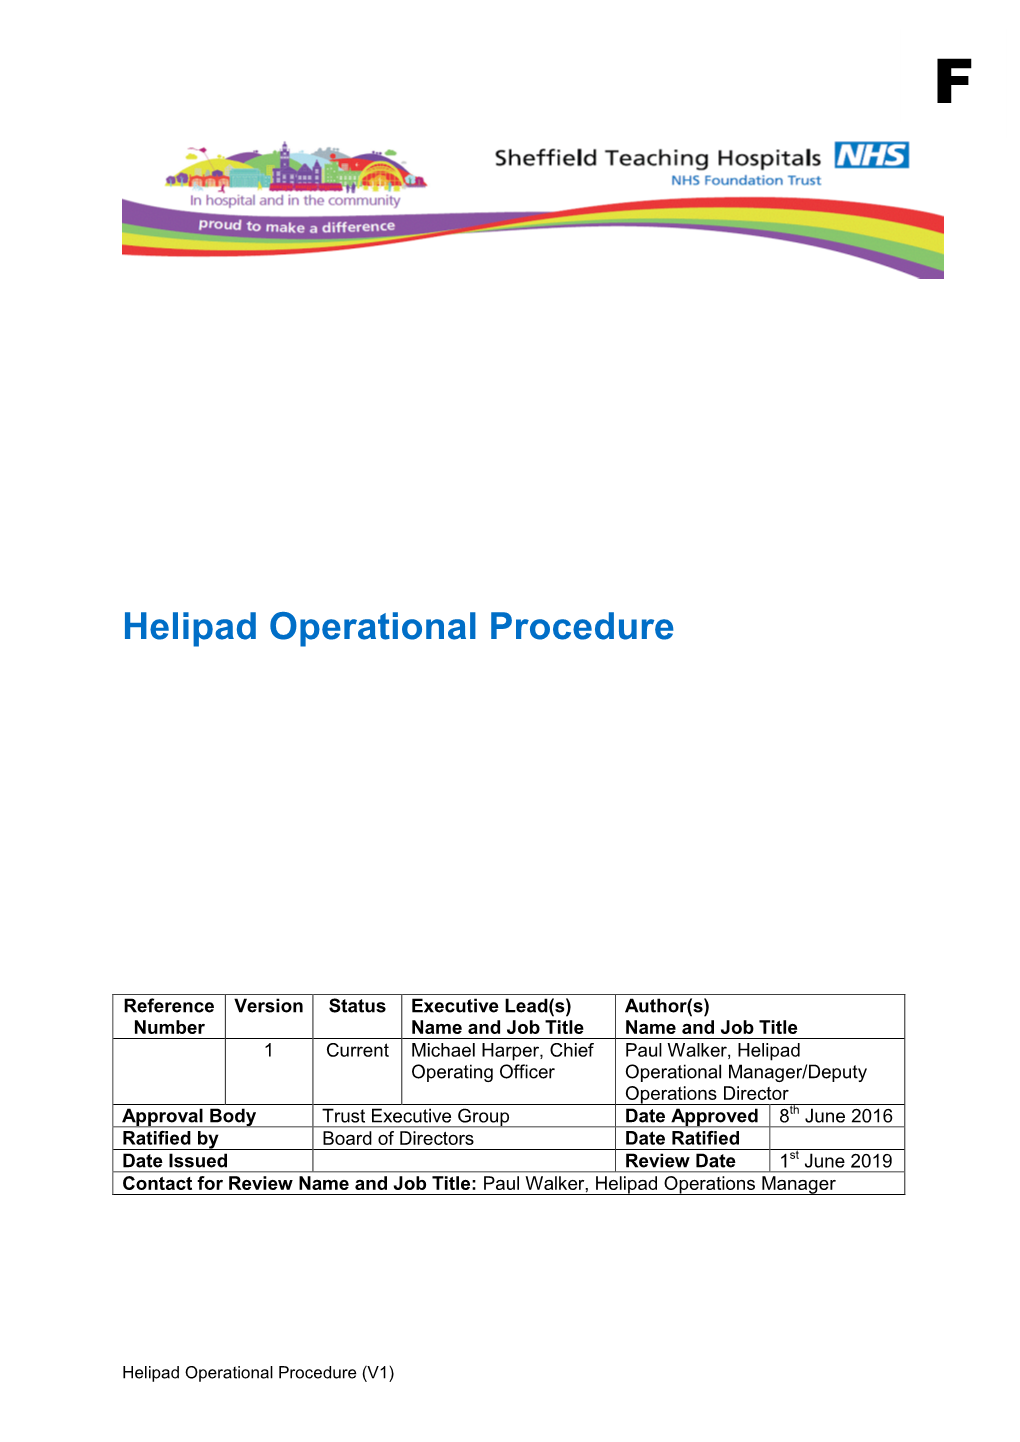 SUHT Helipad Operational Procedure